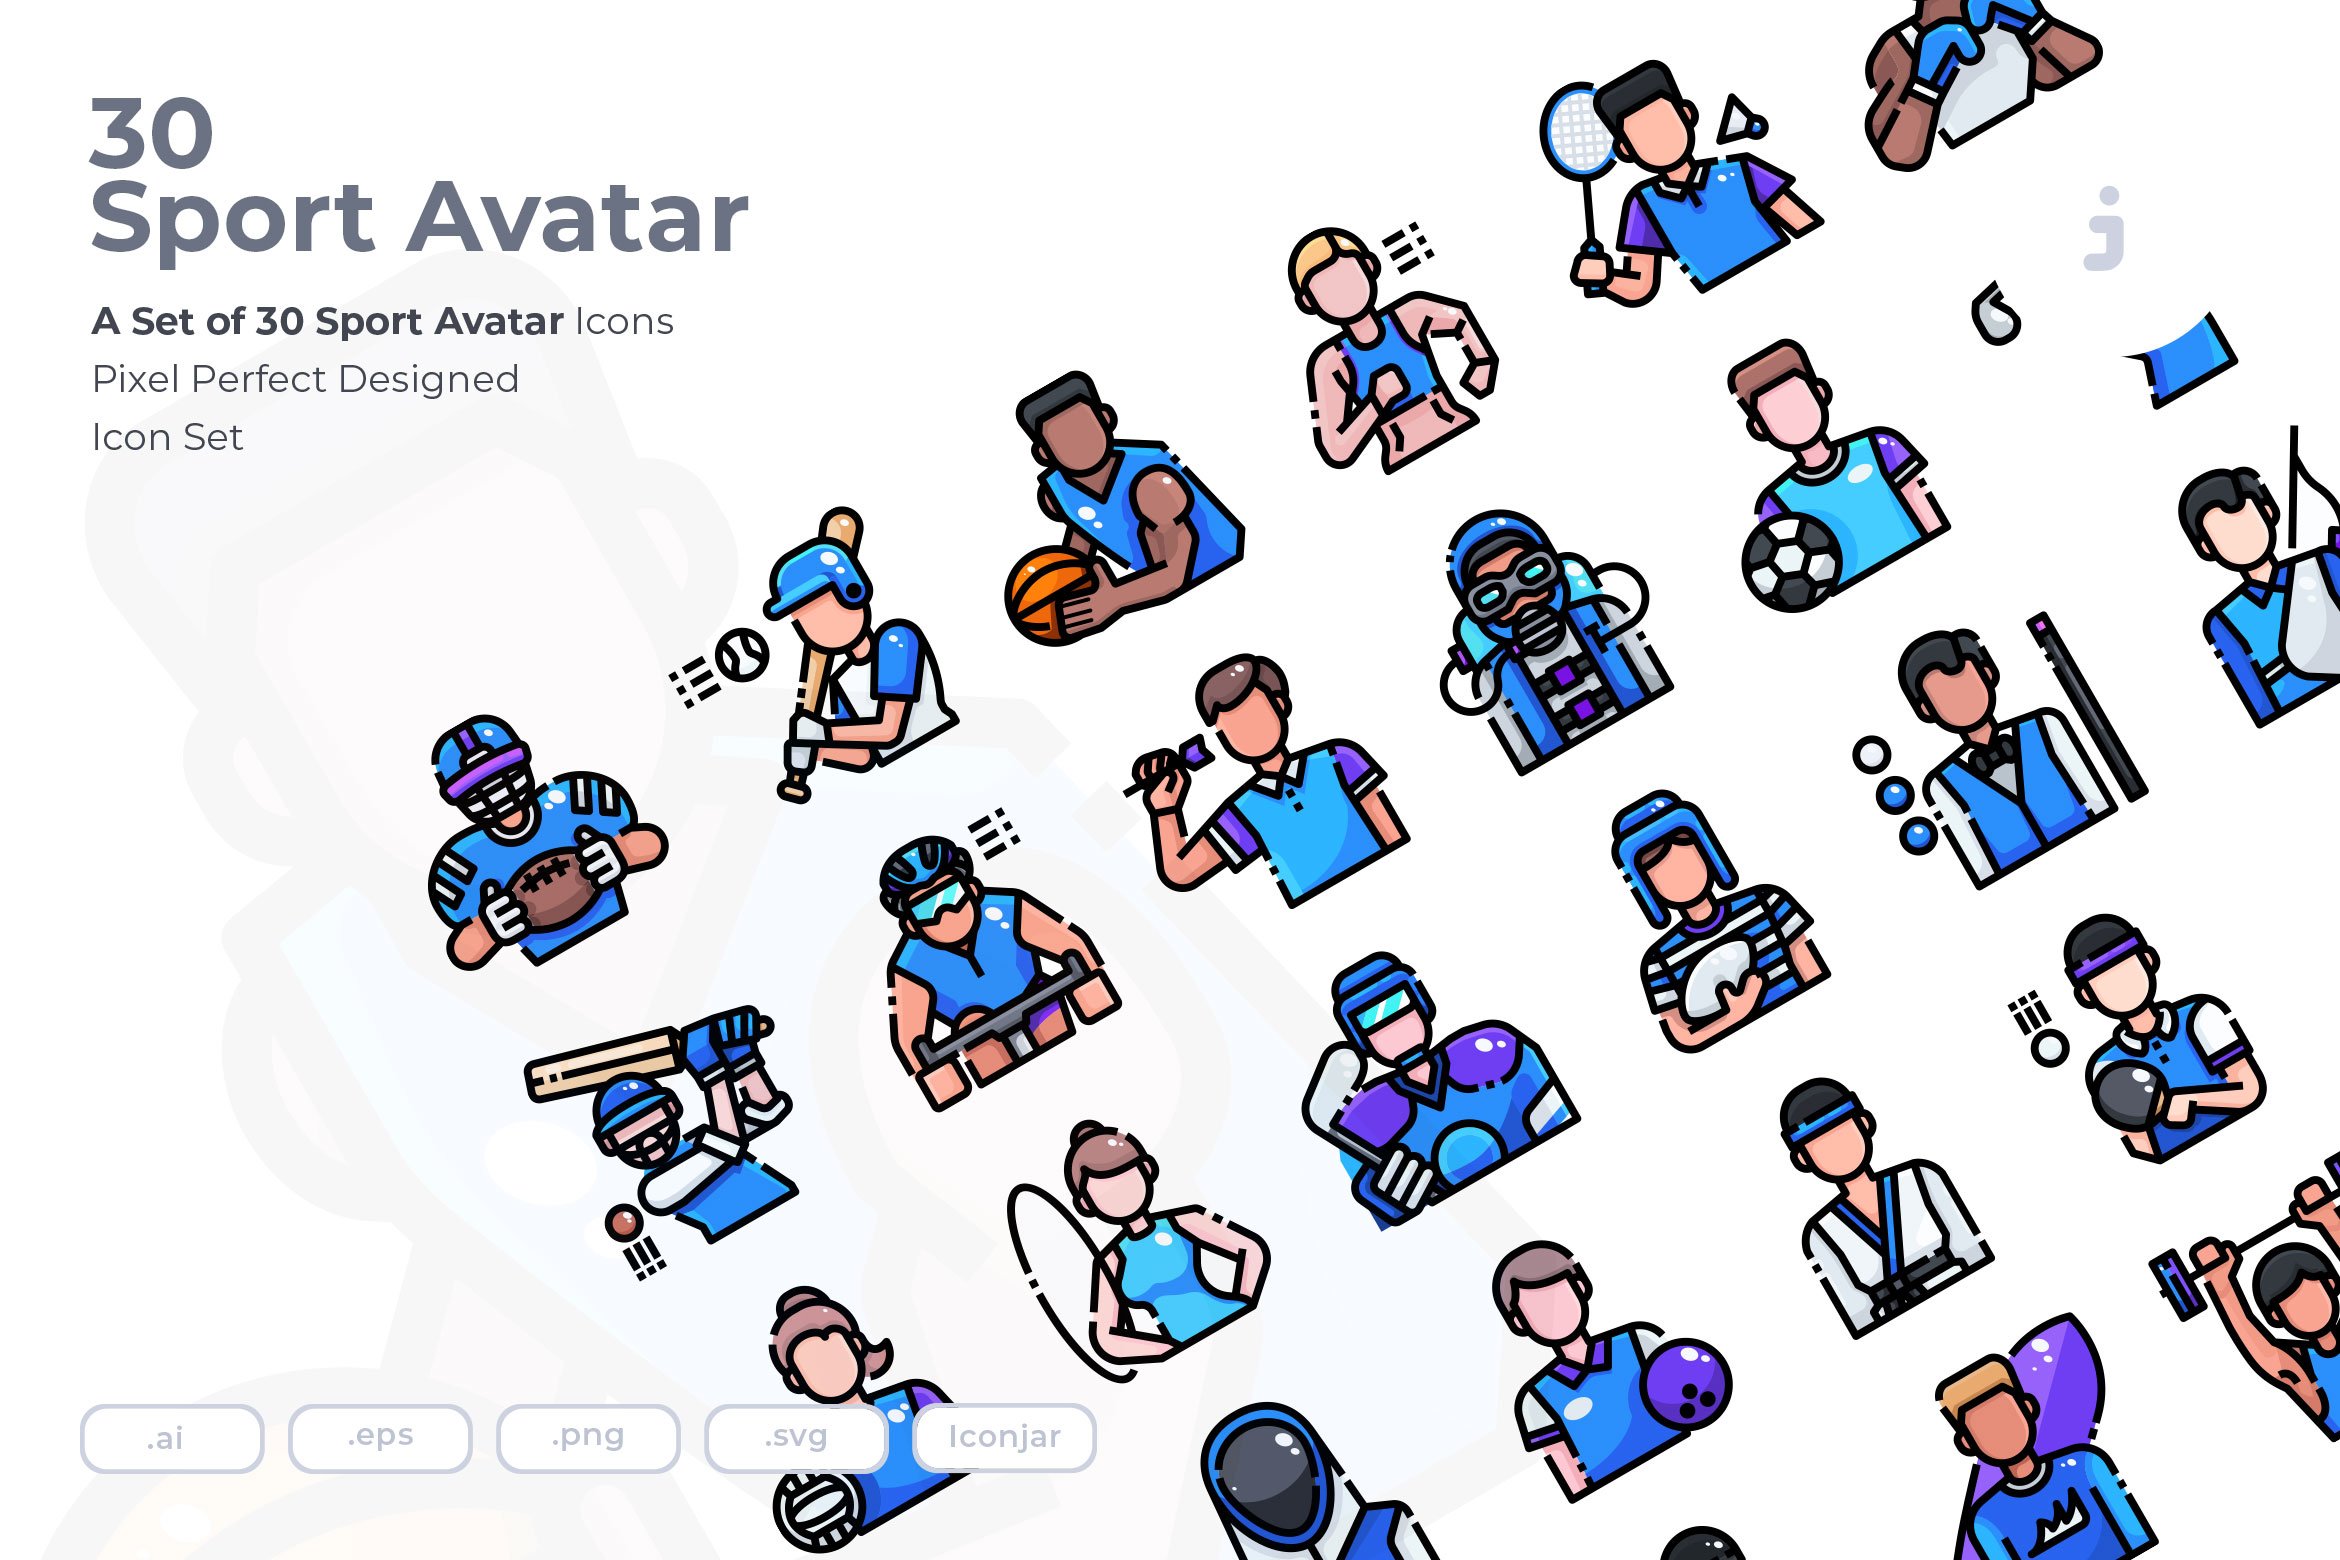 30 Sport Avatar Icon set cover image.